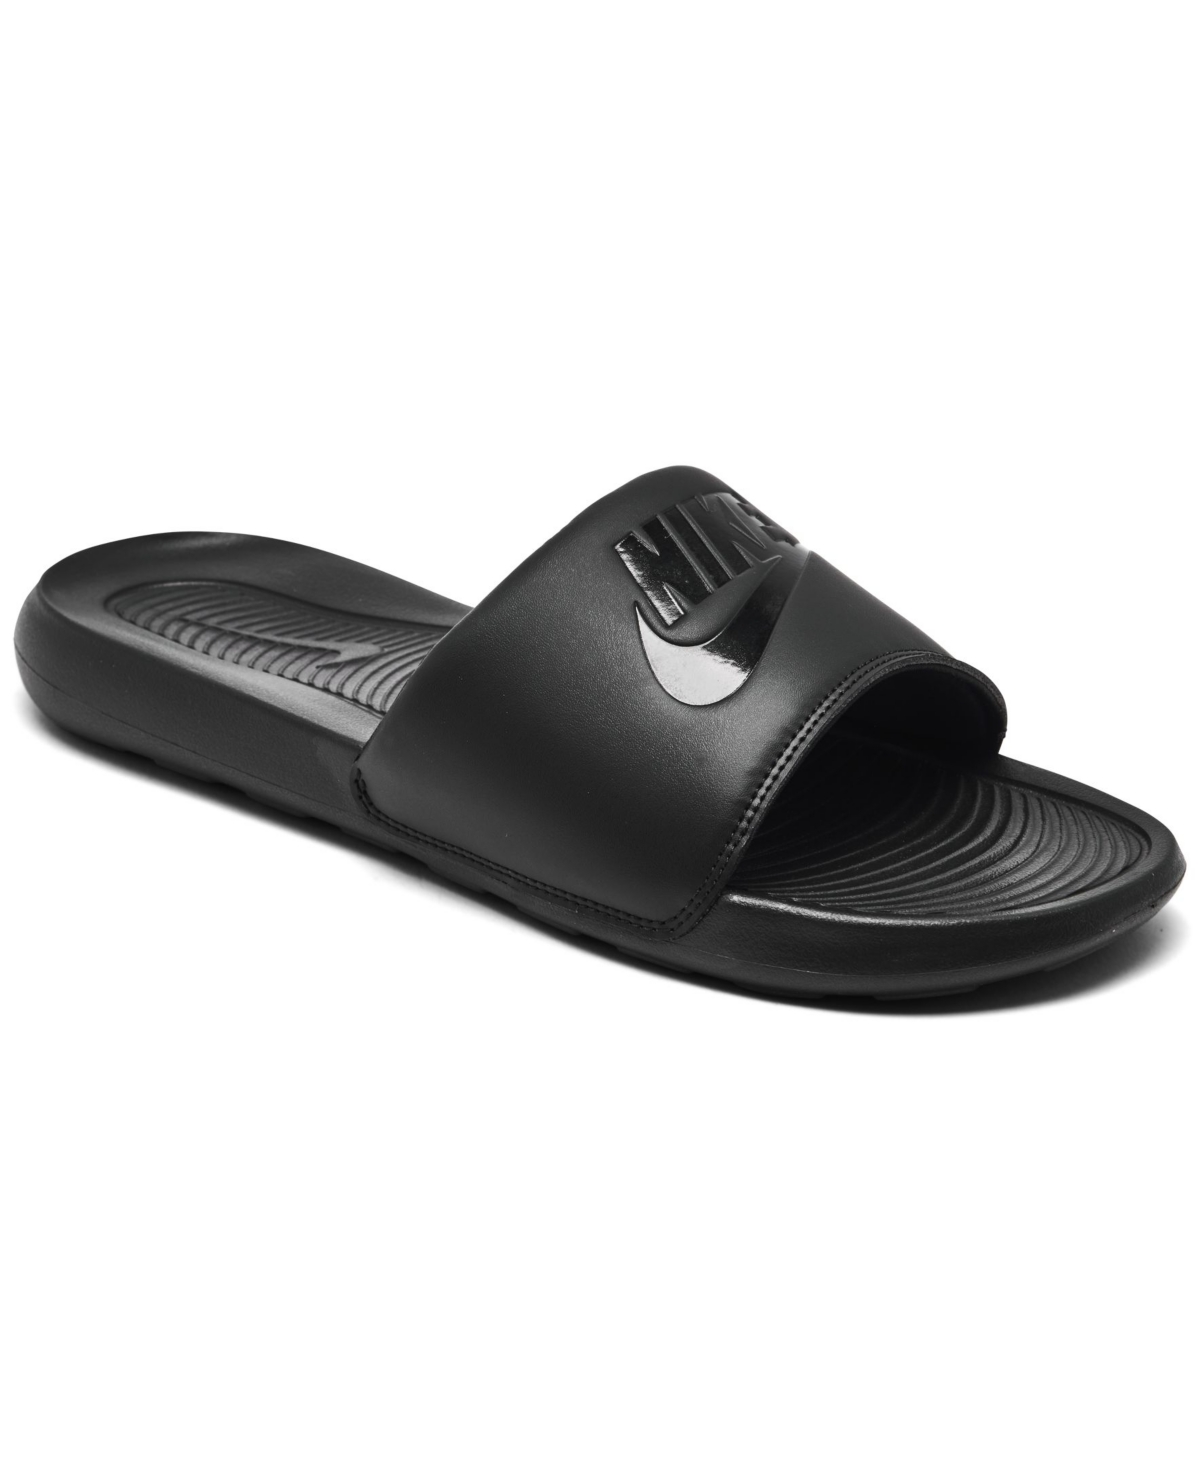 Men's Victori One Slide Sandals from Finish Line - Black